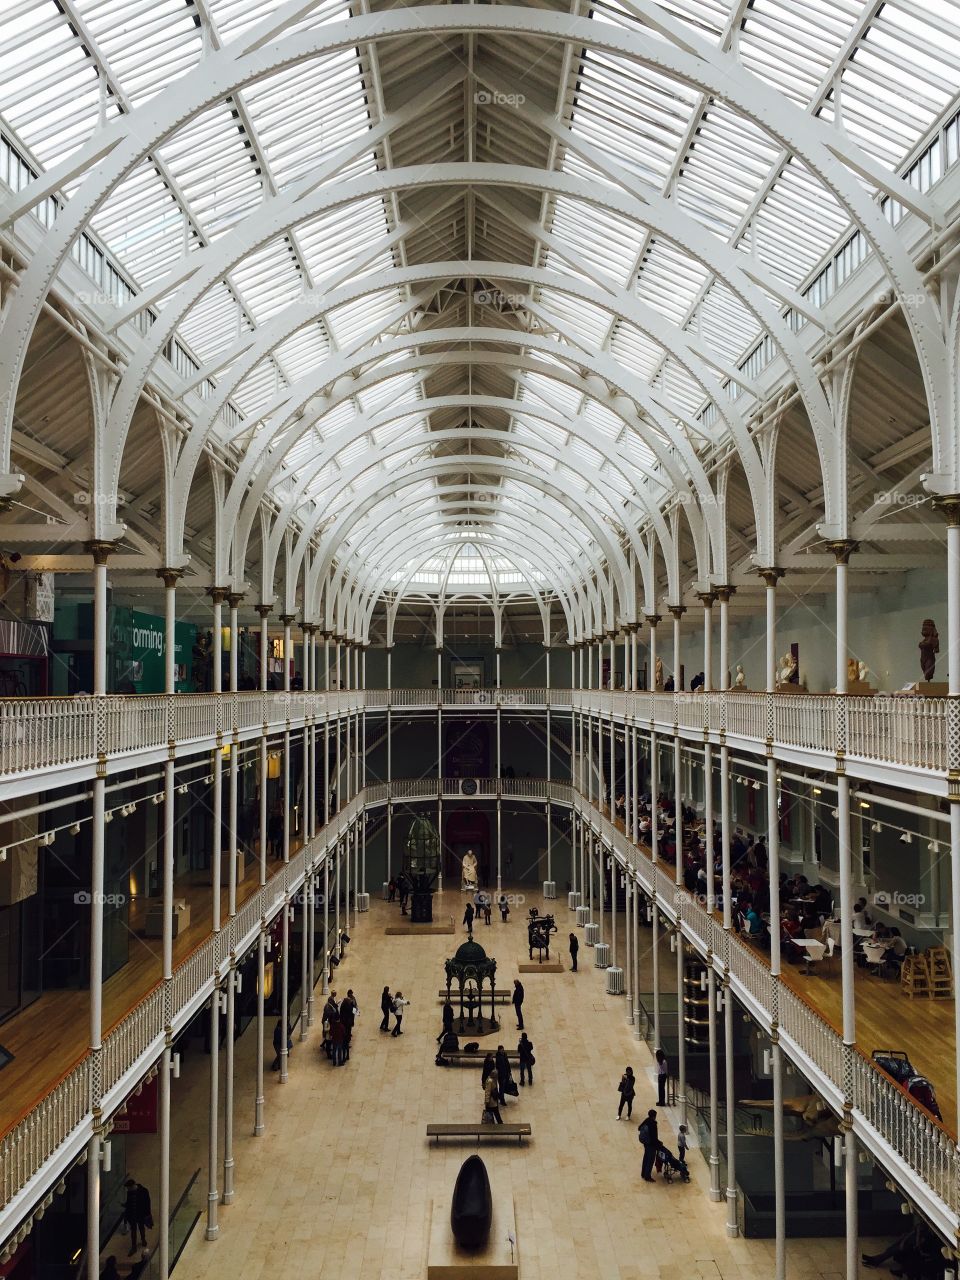 Scottish National Museum. View of the atrium in the Scottish National Museum, Edinburgh